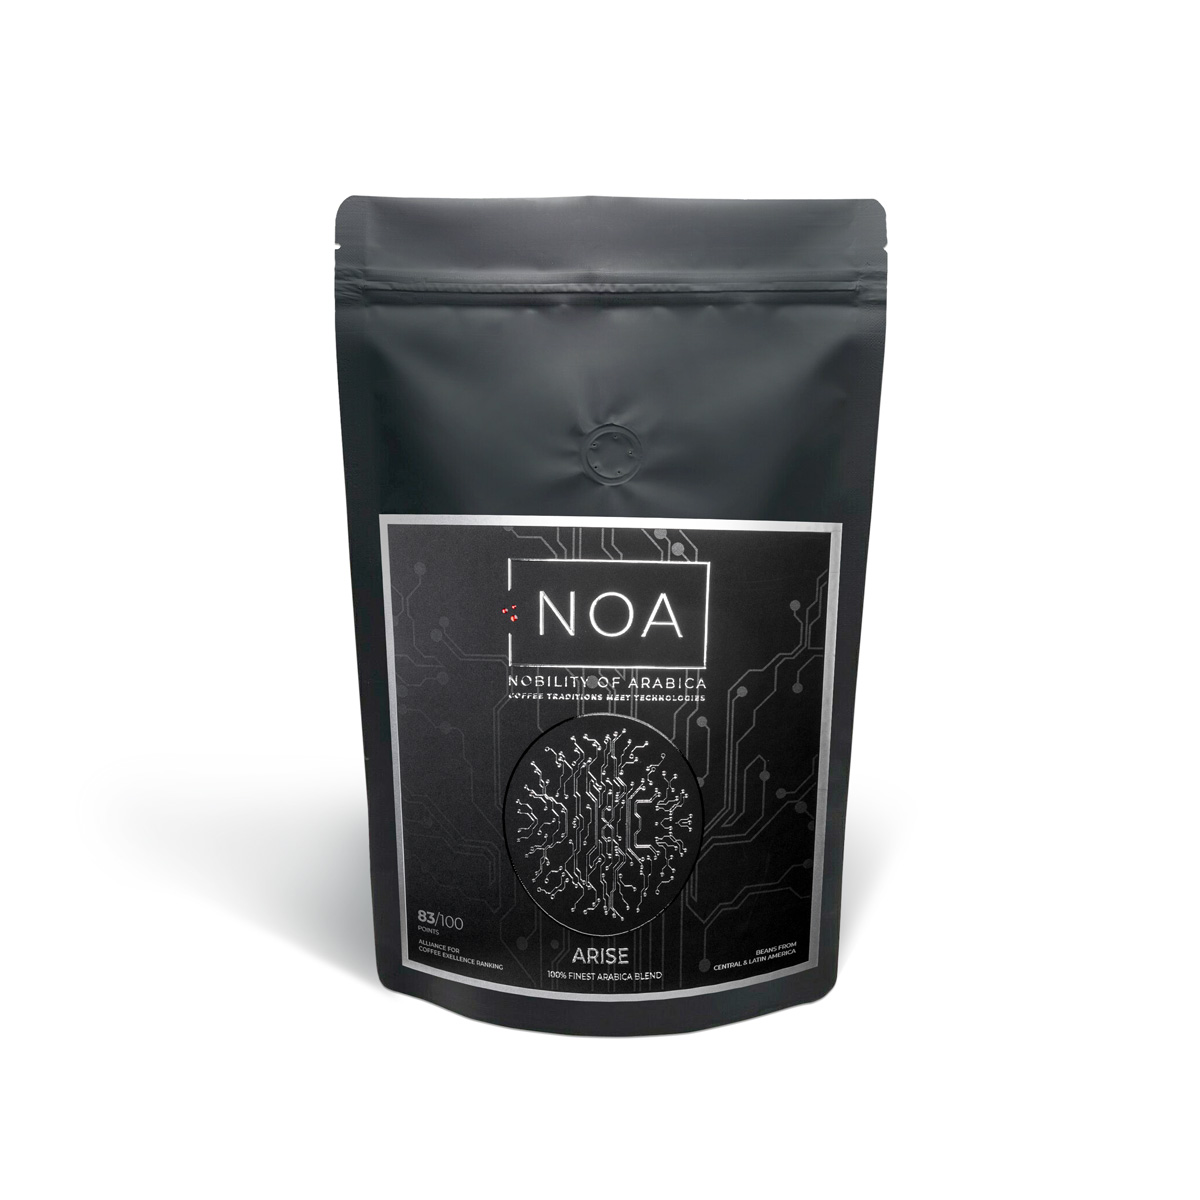 NOA Arise мляно кафе 200гр | Specialty Coffee | Кафе |